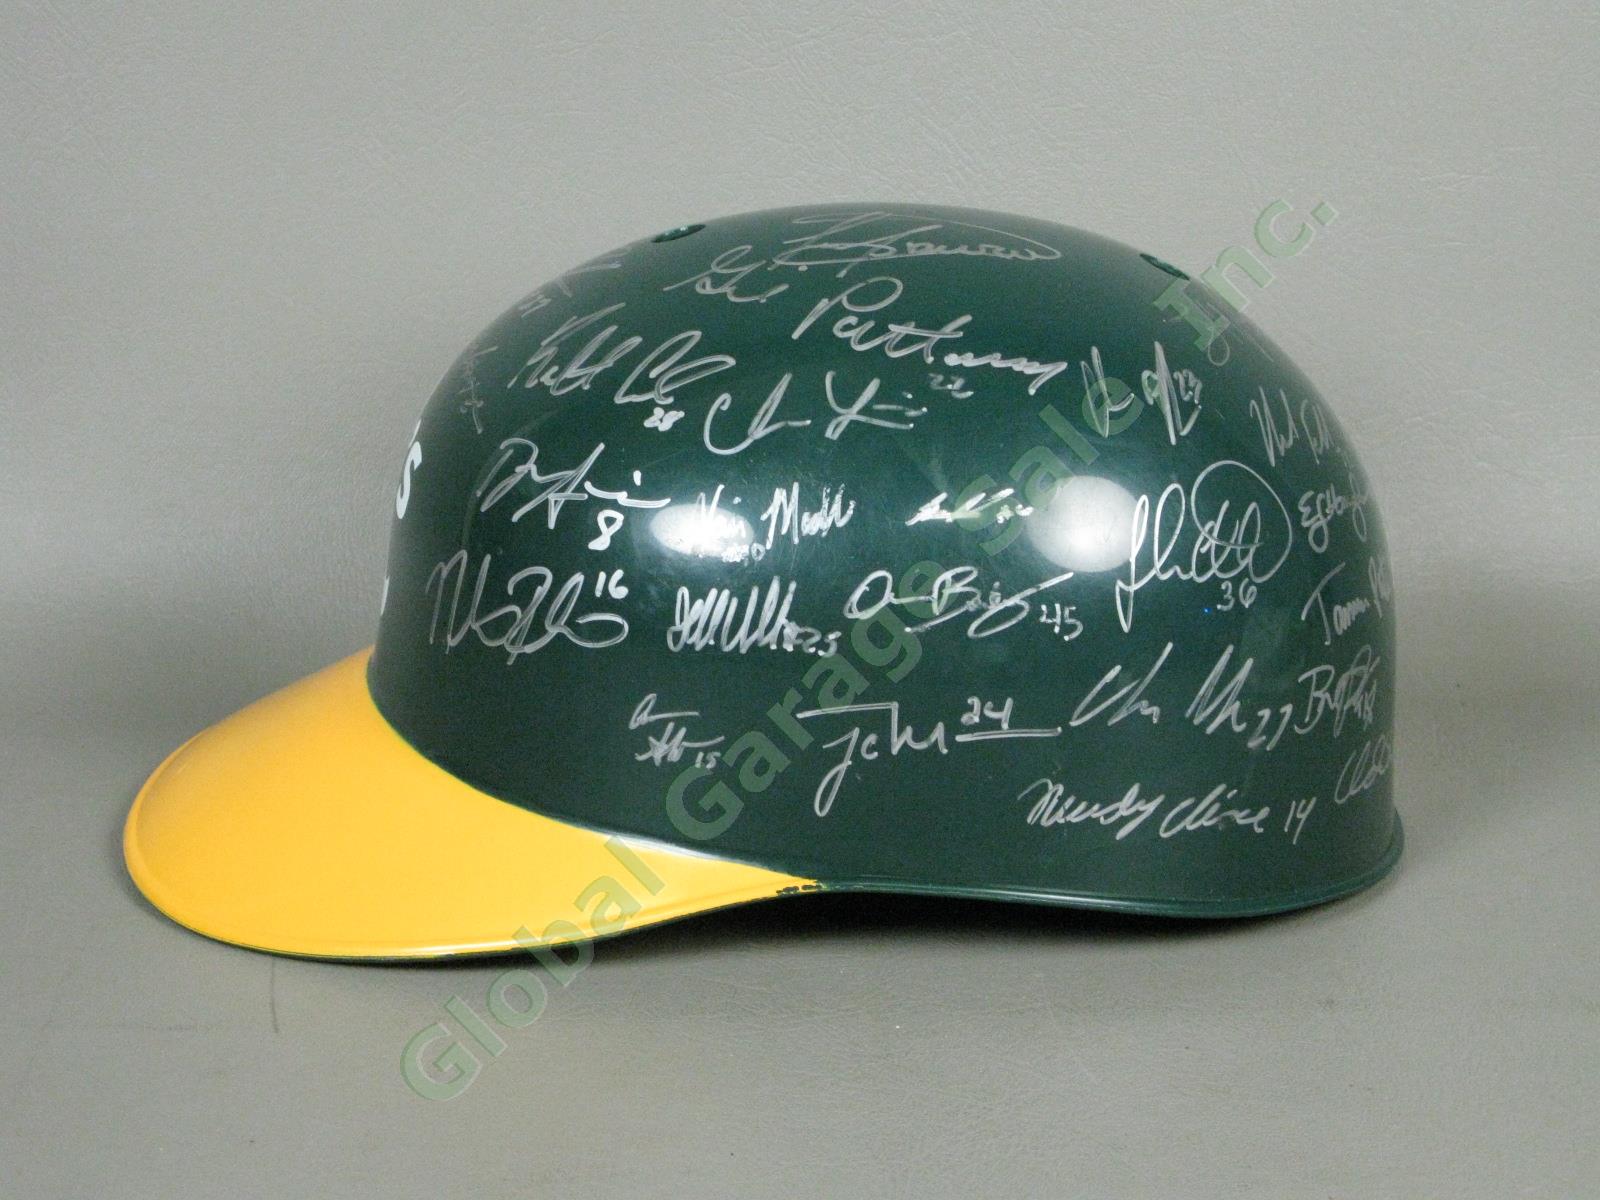 2011 Vermont Lake Monsters Team Signed Baseball Helmet NYPL Oakland Athletics NR 3